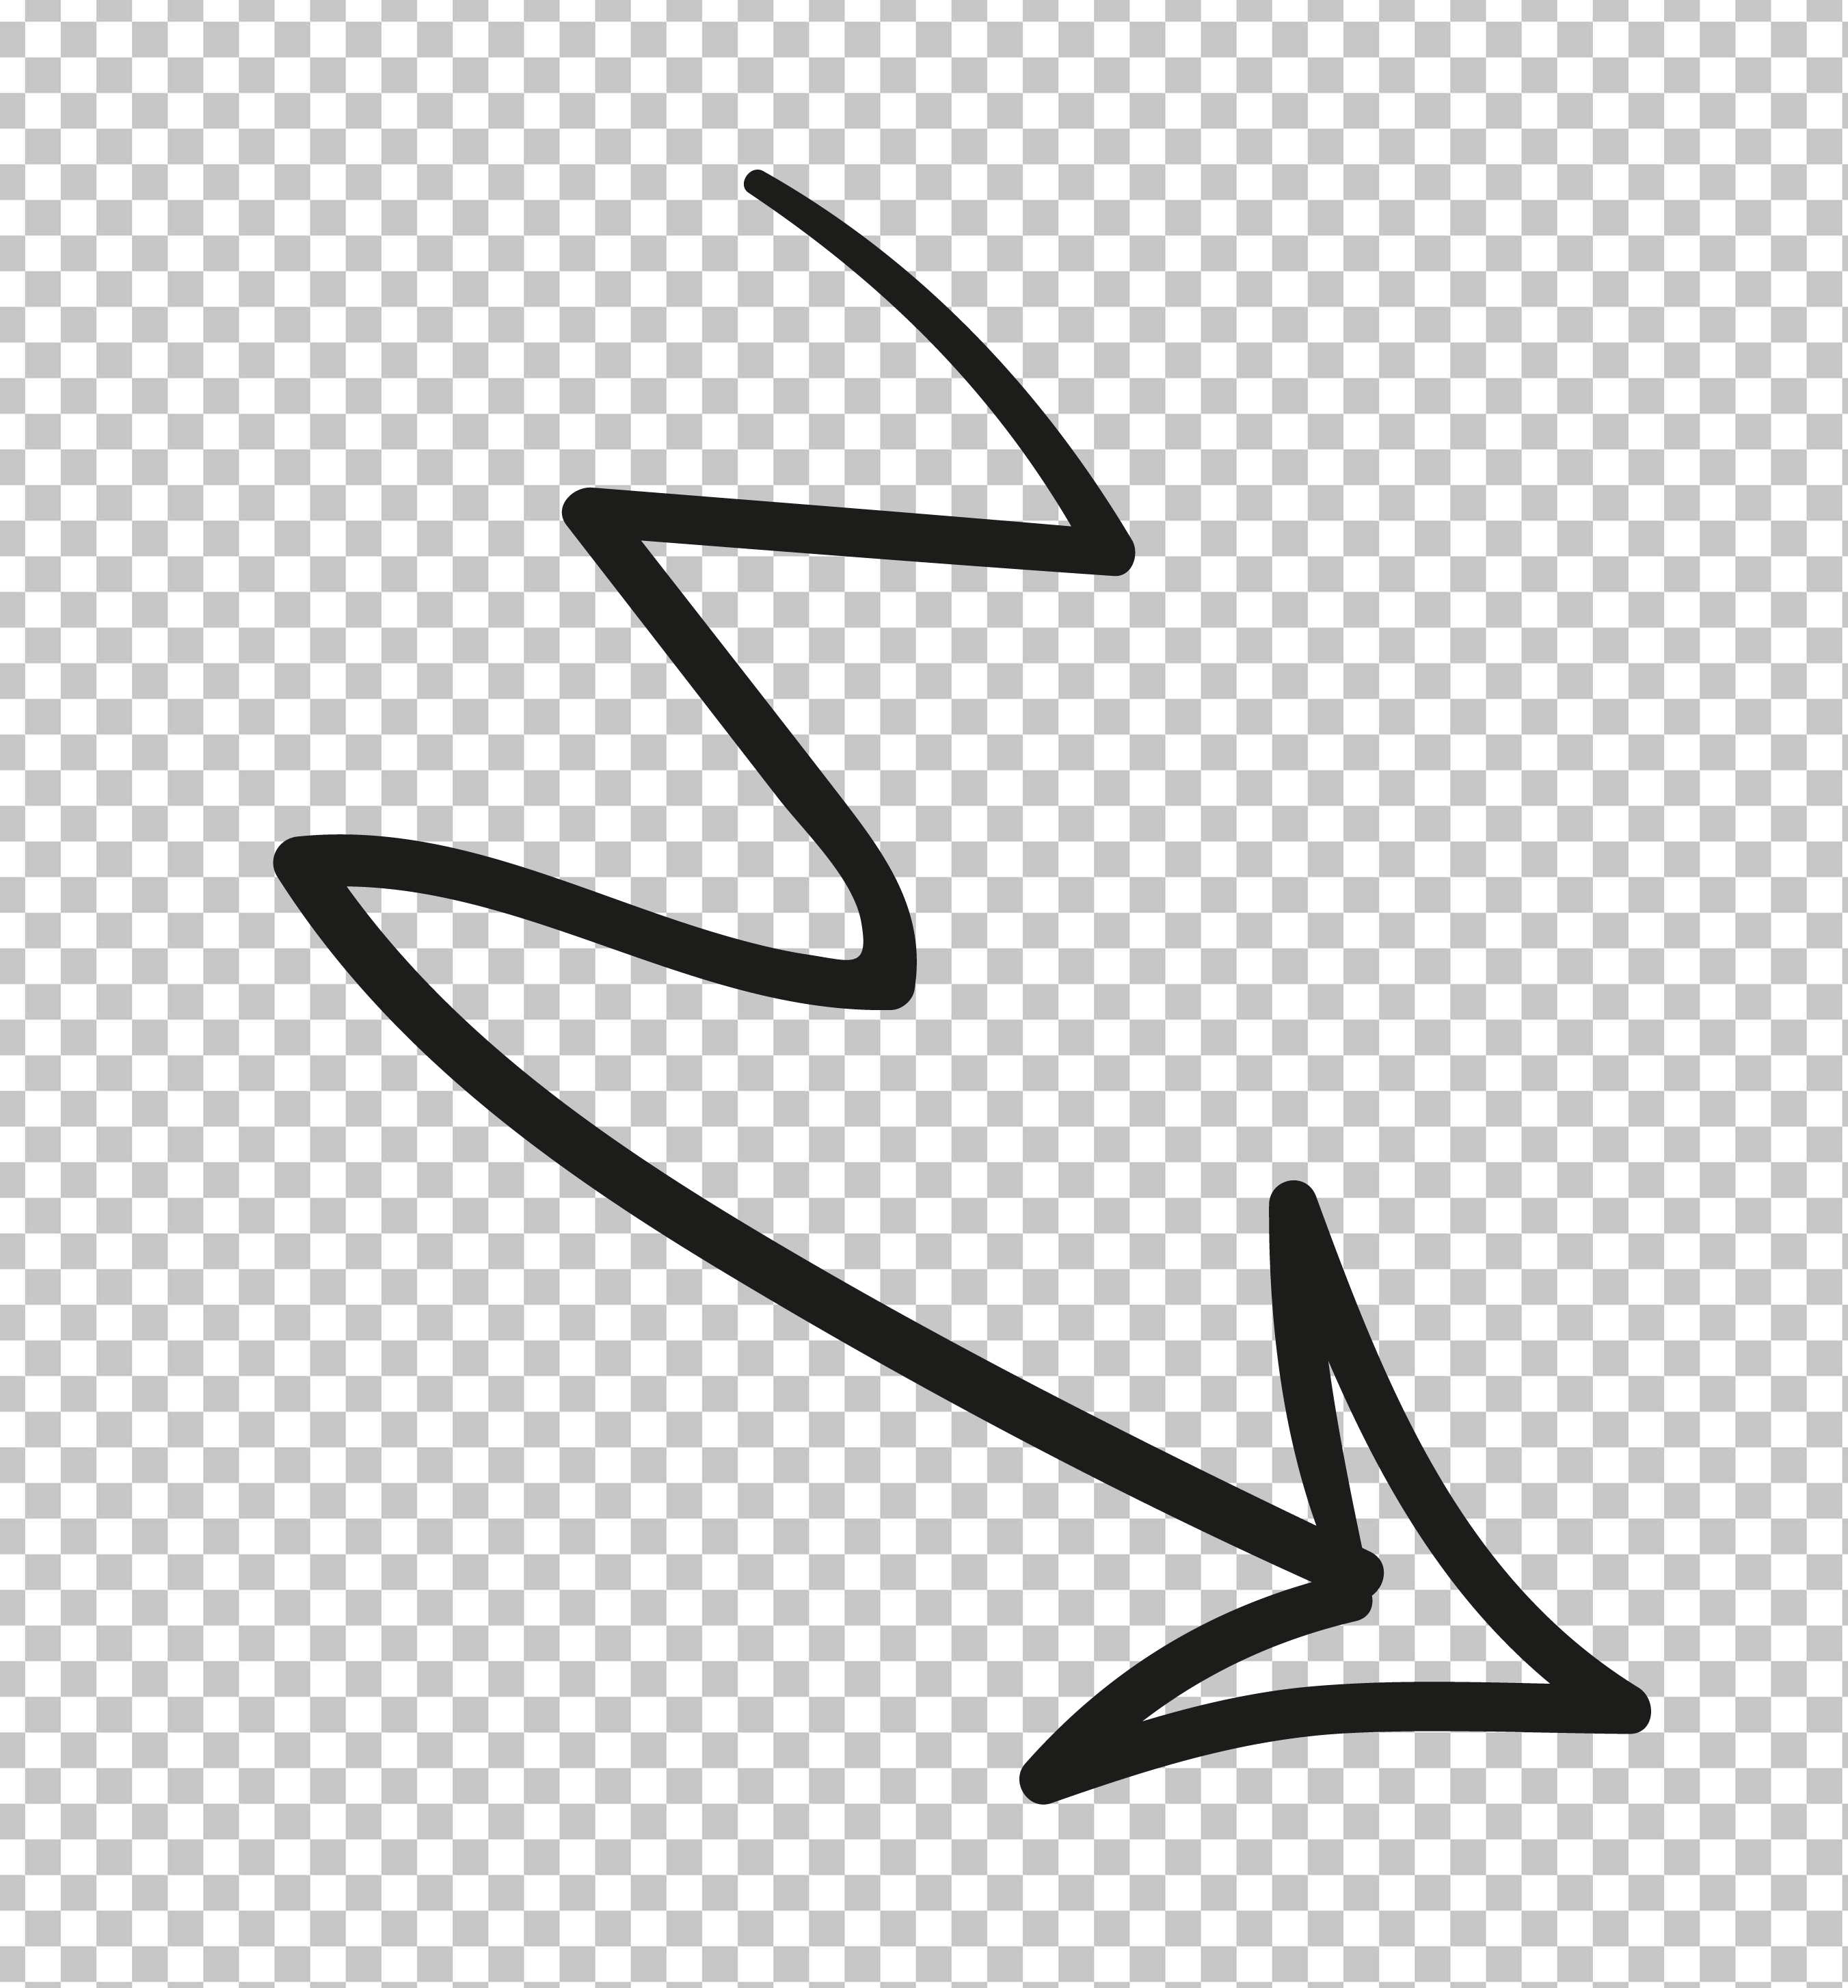 drawn arrow png